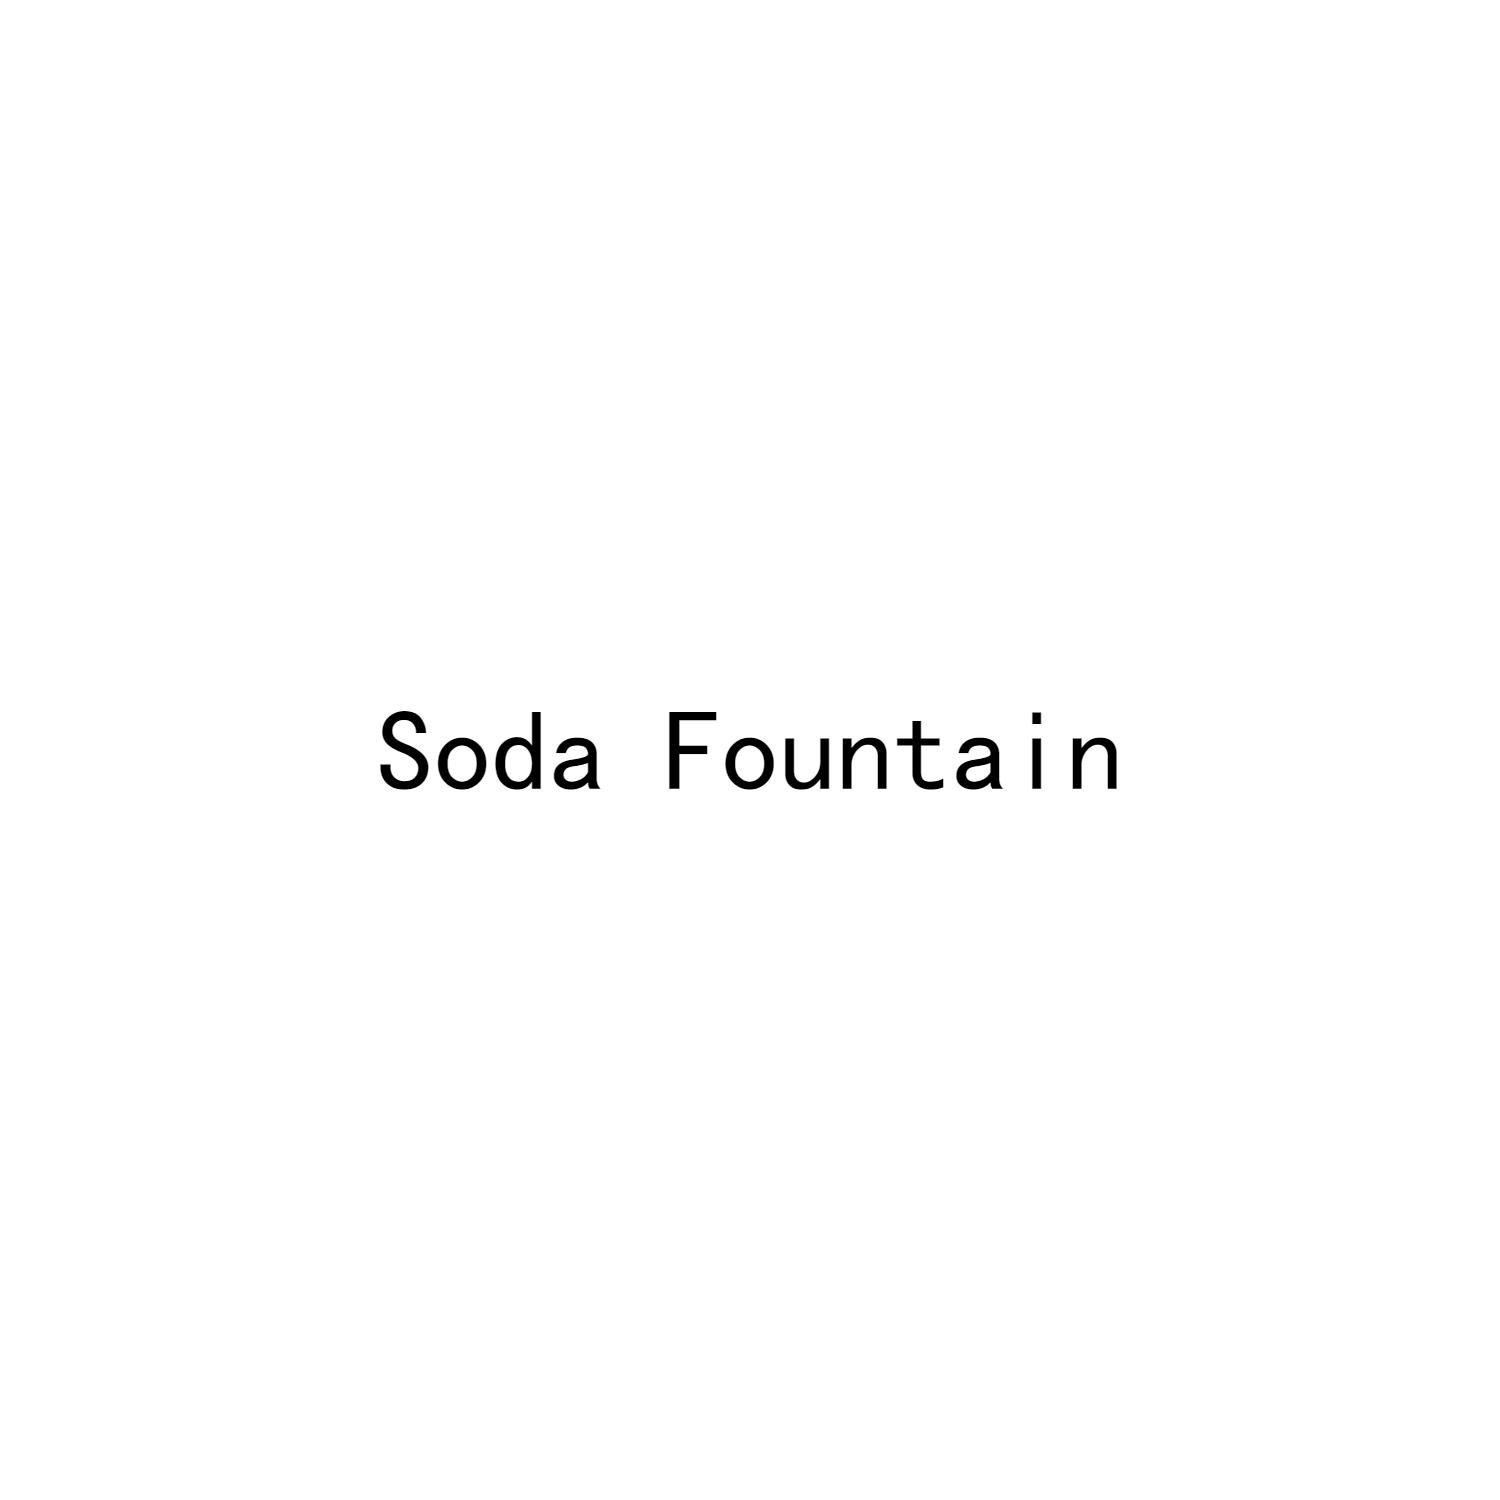 SODA FOUNTAIN